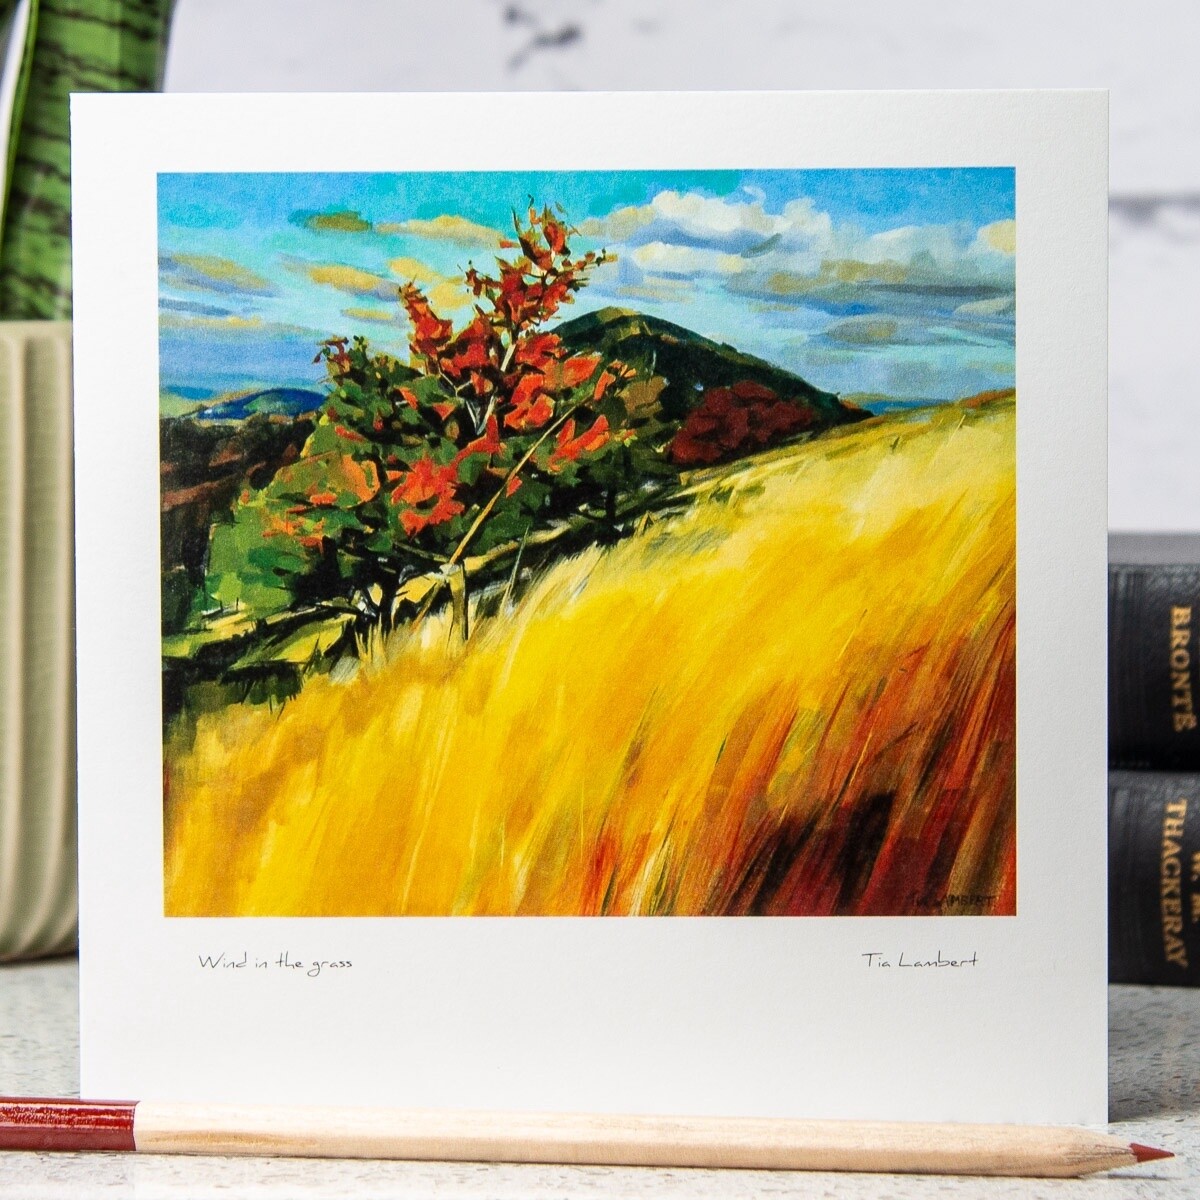 Wind in the Grass - Malverns Landscape Card by Tia Lambert